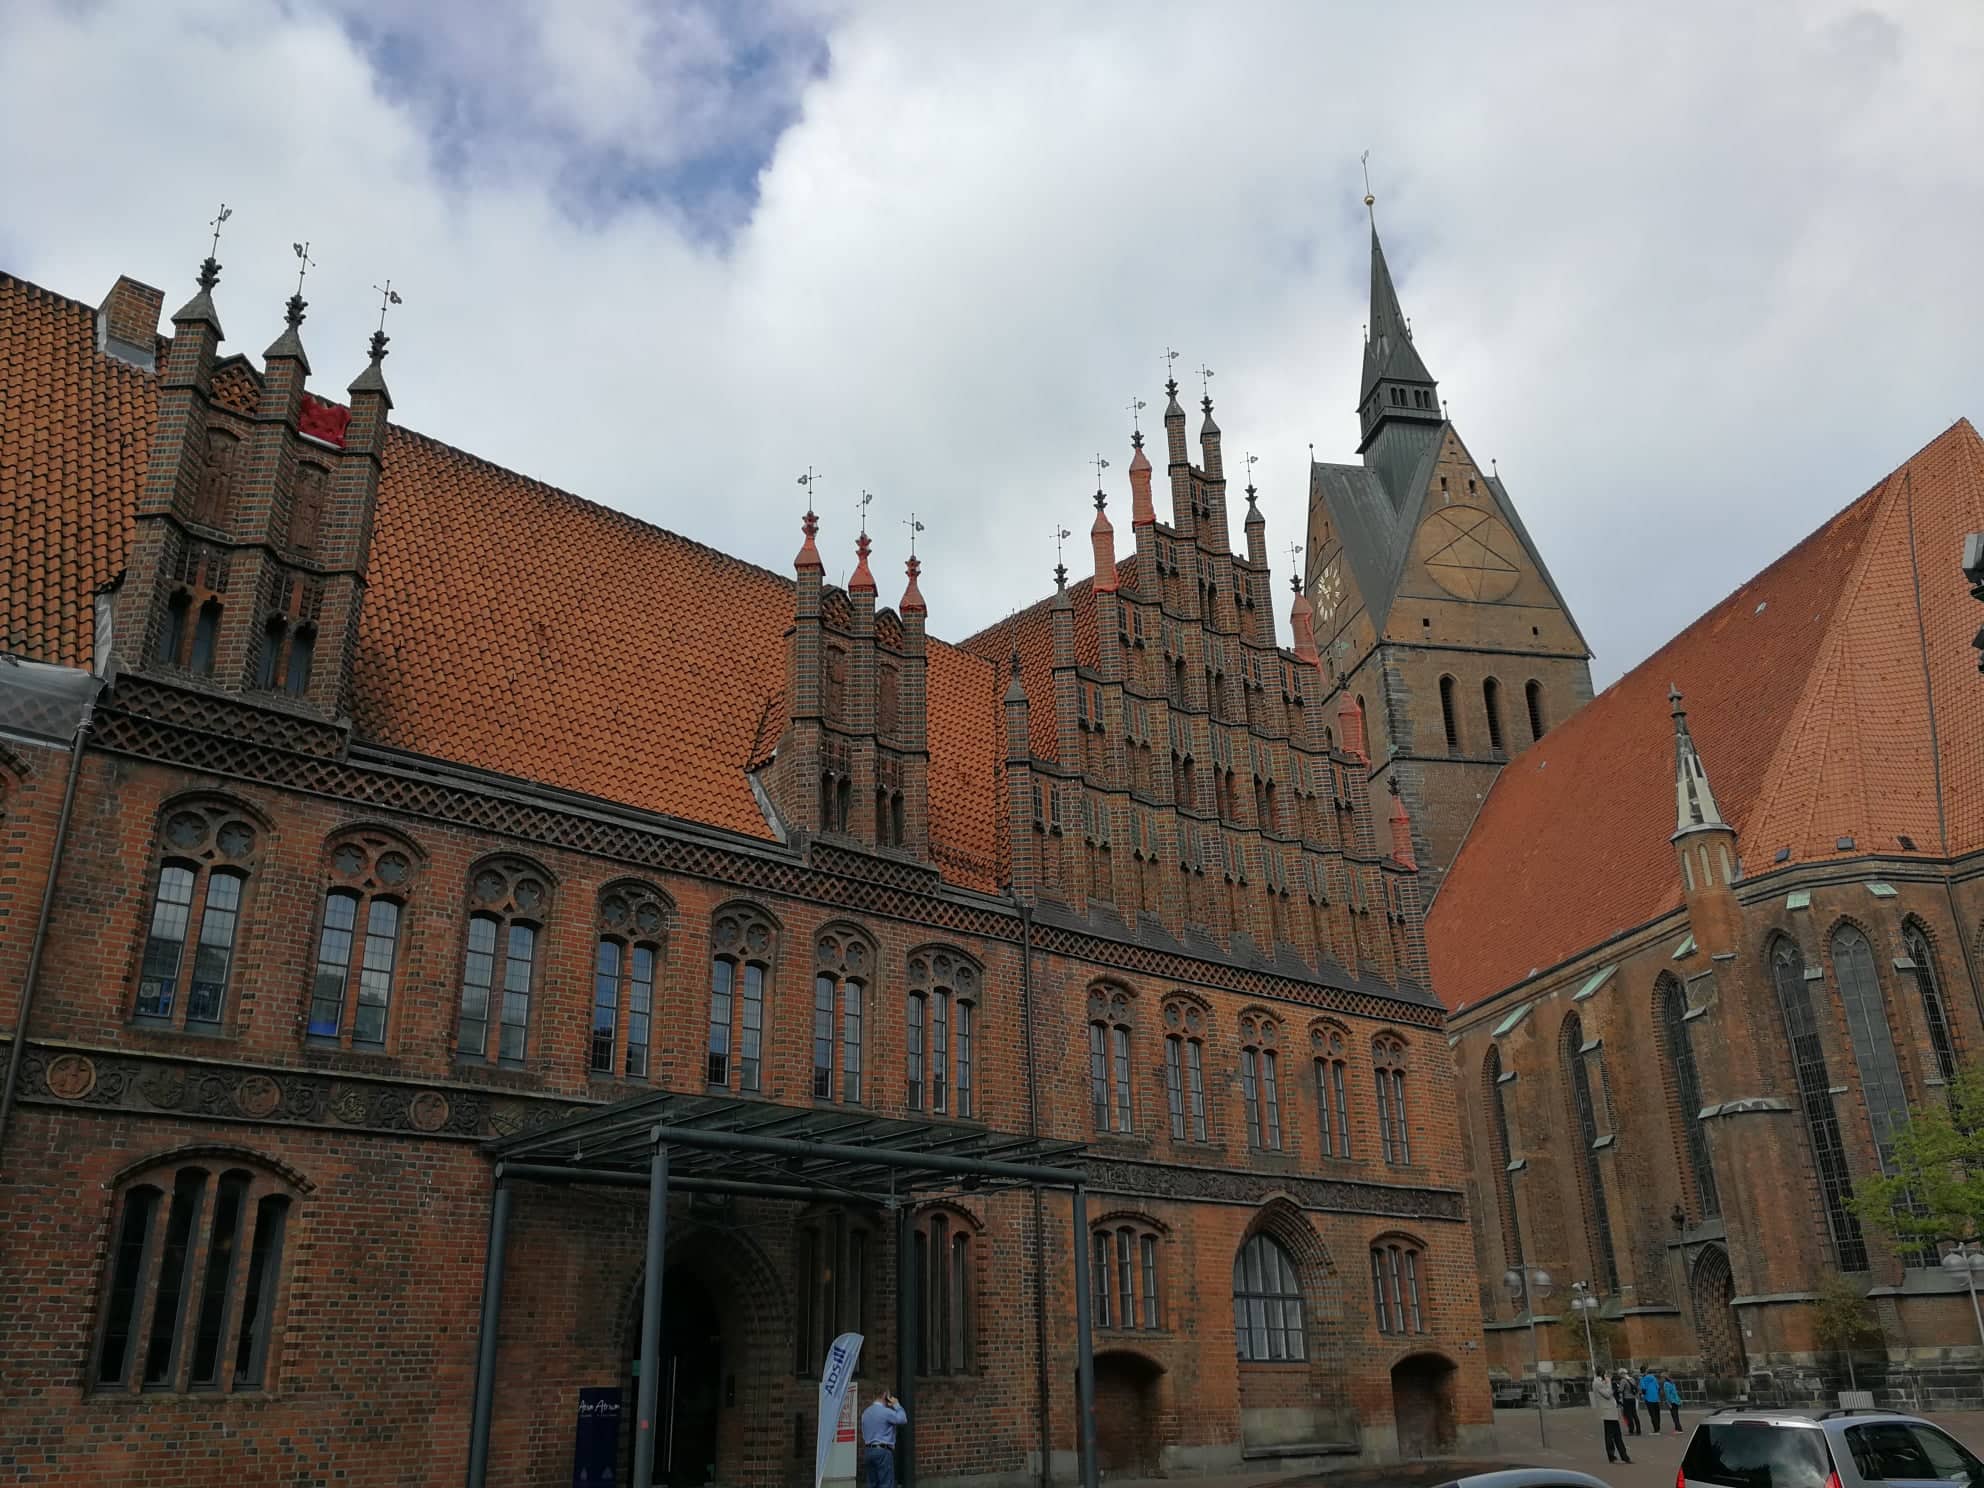 Marktkirche crkva- jedna od glavnih znamenitosti Hanovera